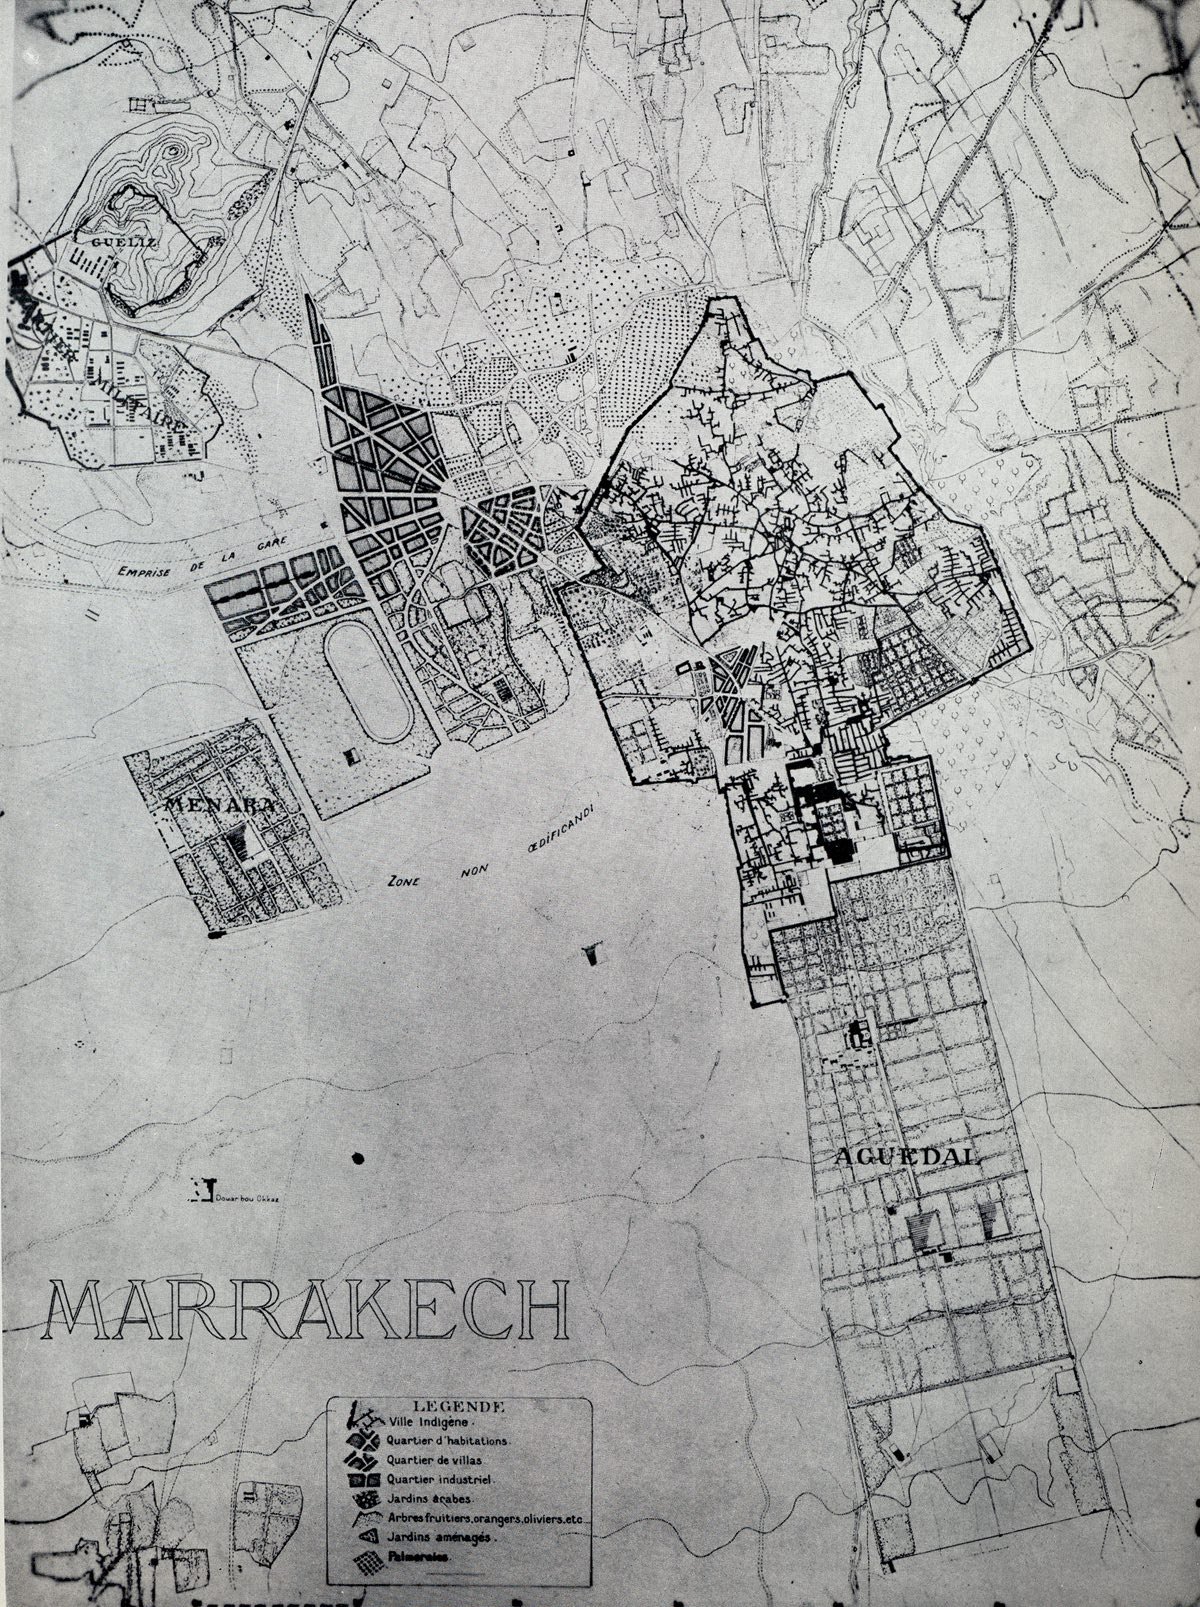 Marrakech Master Plan Prost 1925 (?)